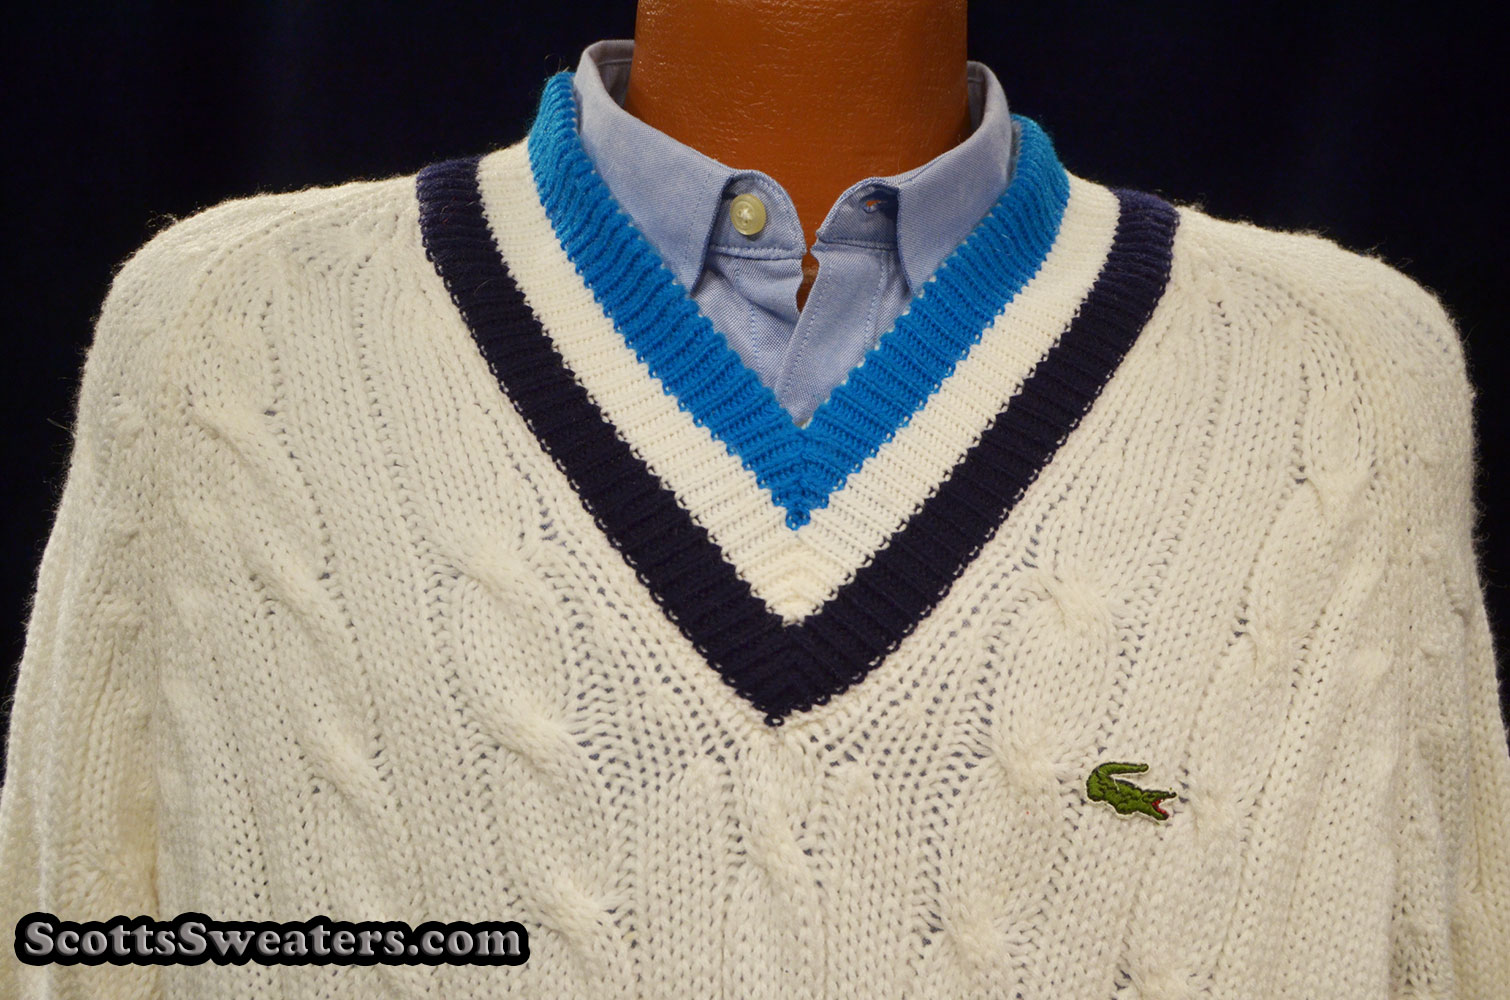 198-013 Izod Lacoste Tennis Sweater